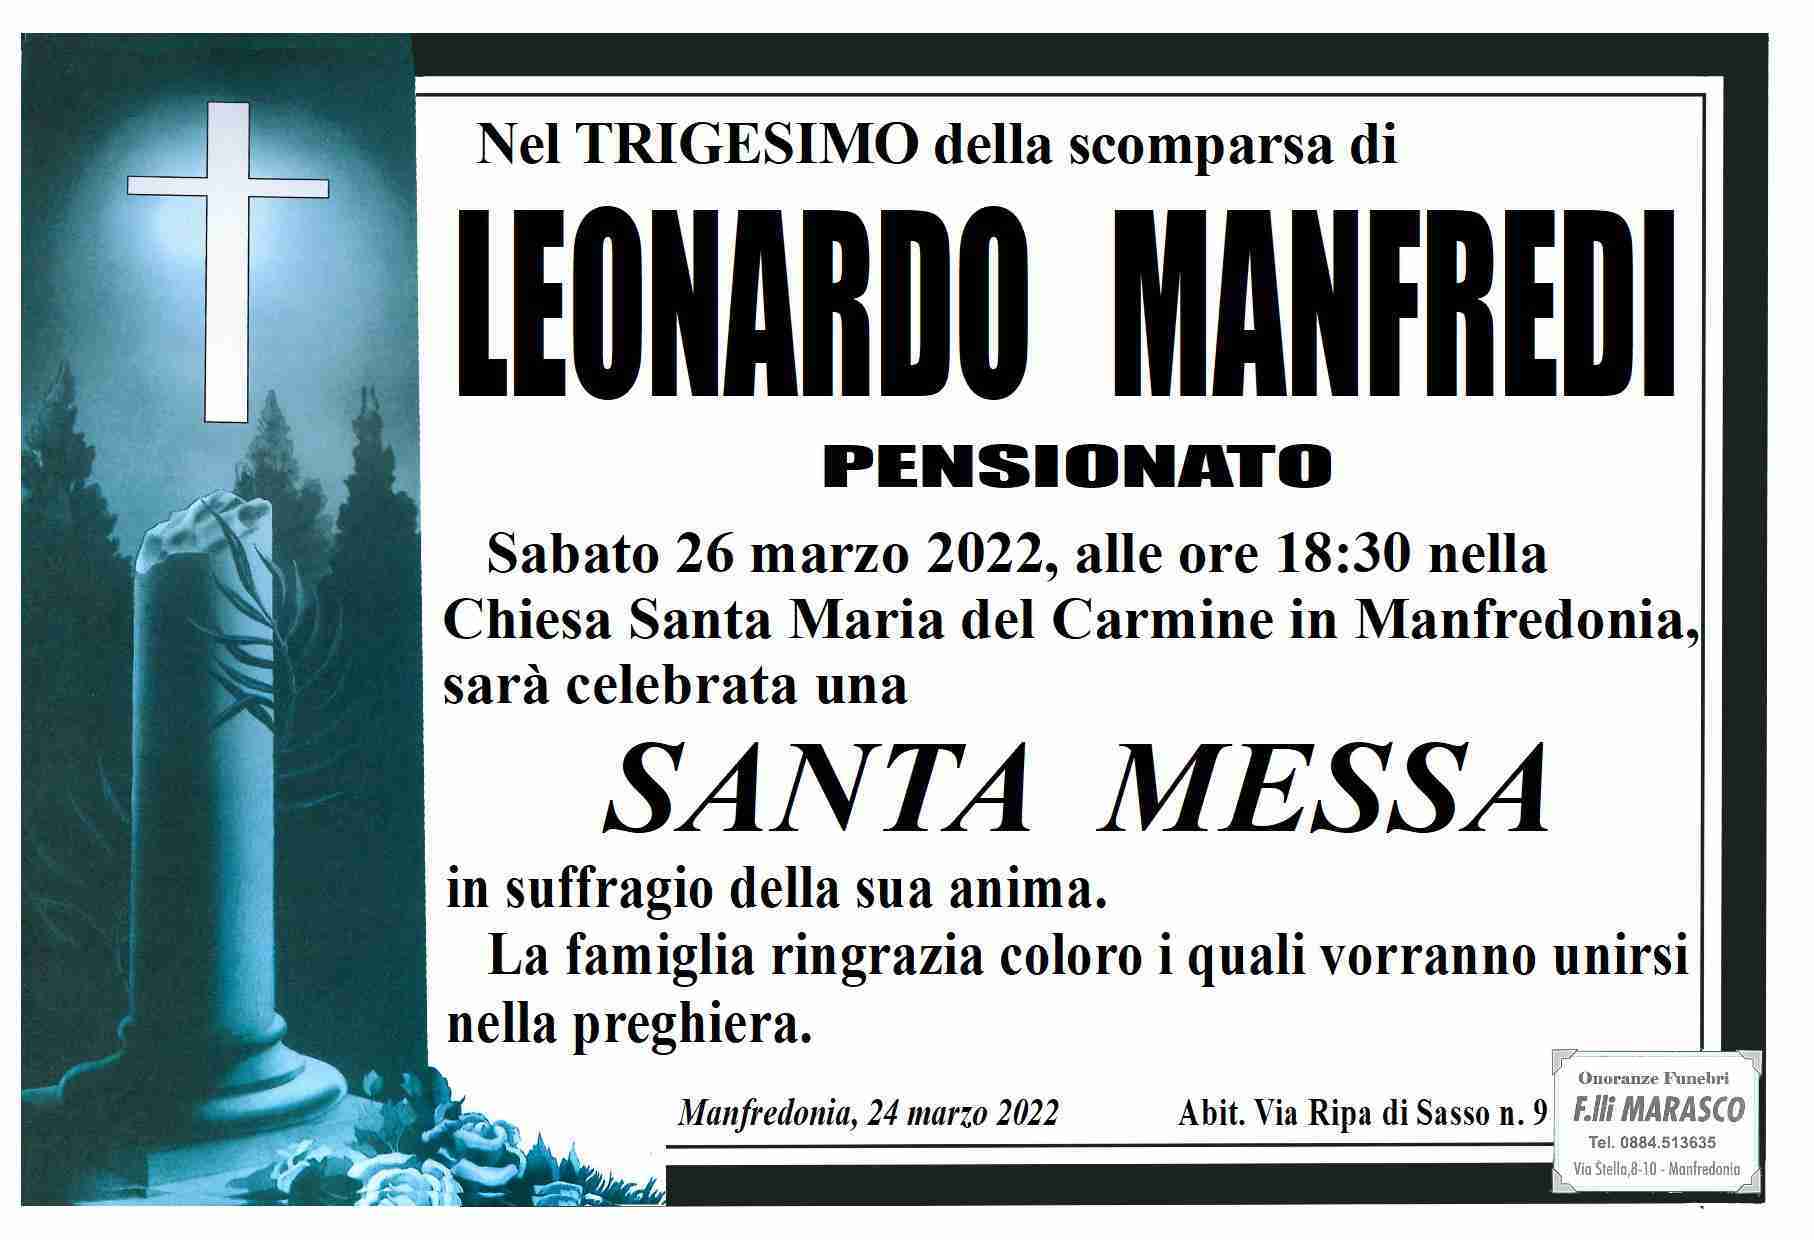 Leonardo Manfredi